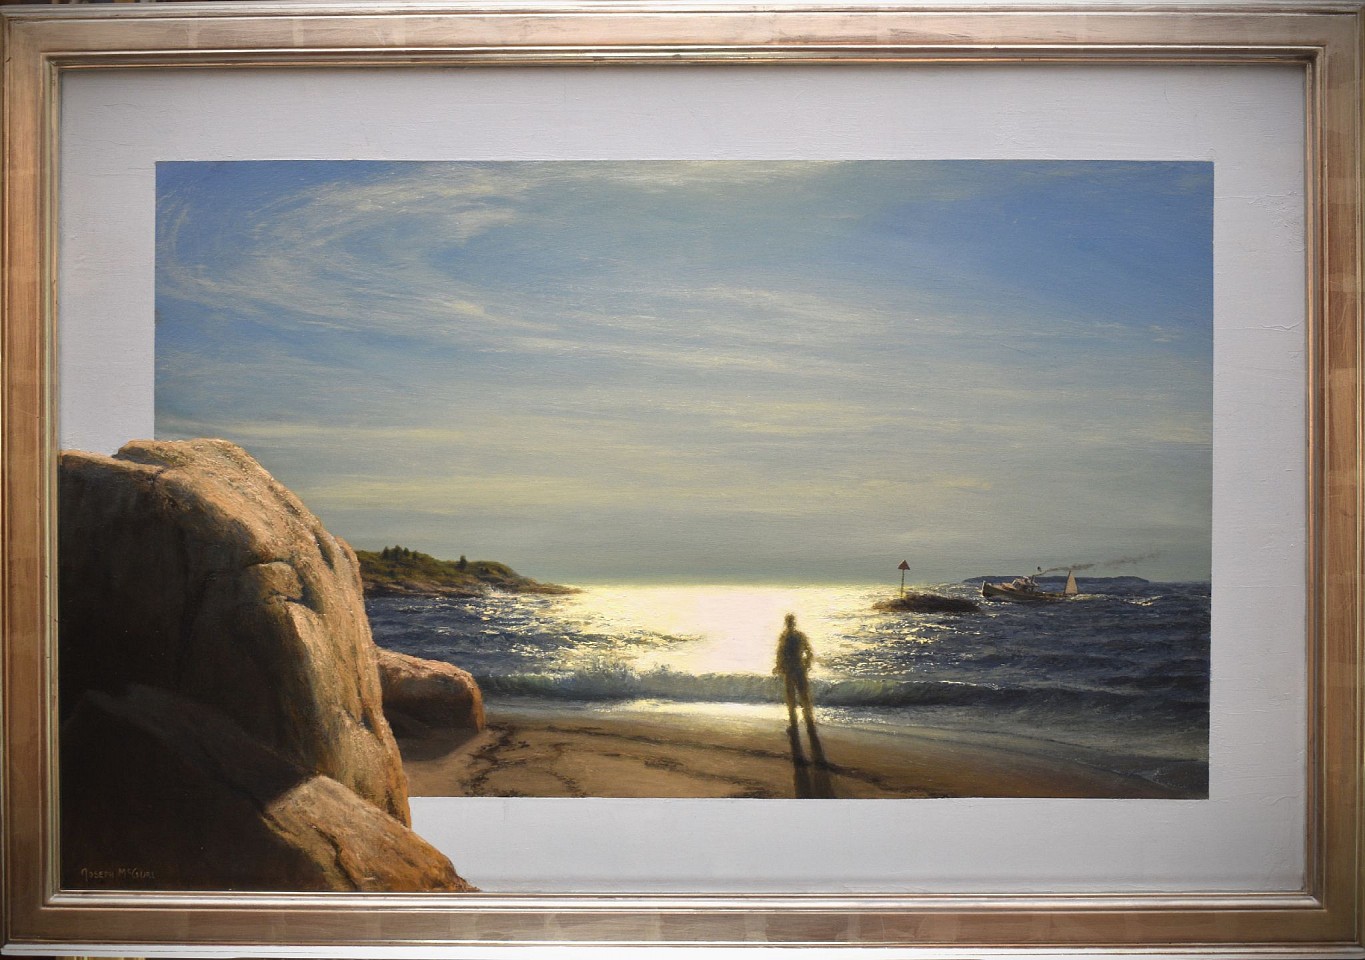 Joseph McGurl, Light on the Sea
oil on linen, 24 x 36 in. (61 x 91.4 cm)
JM240301